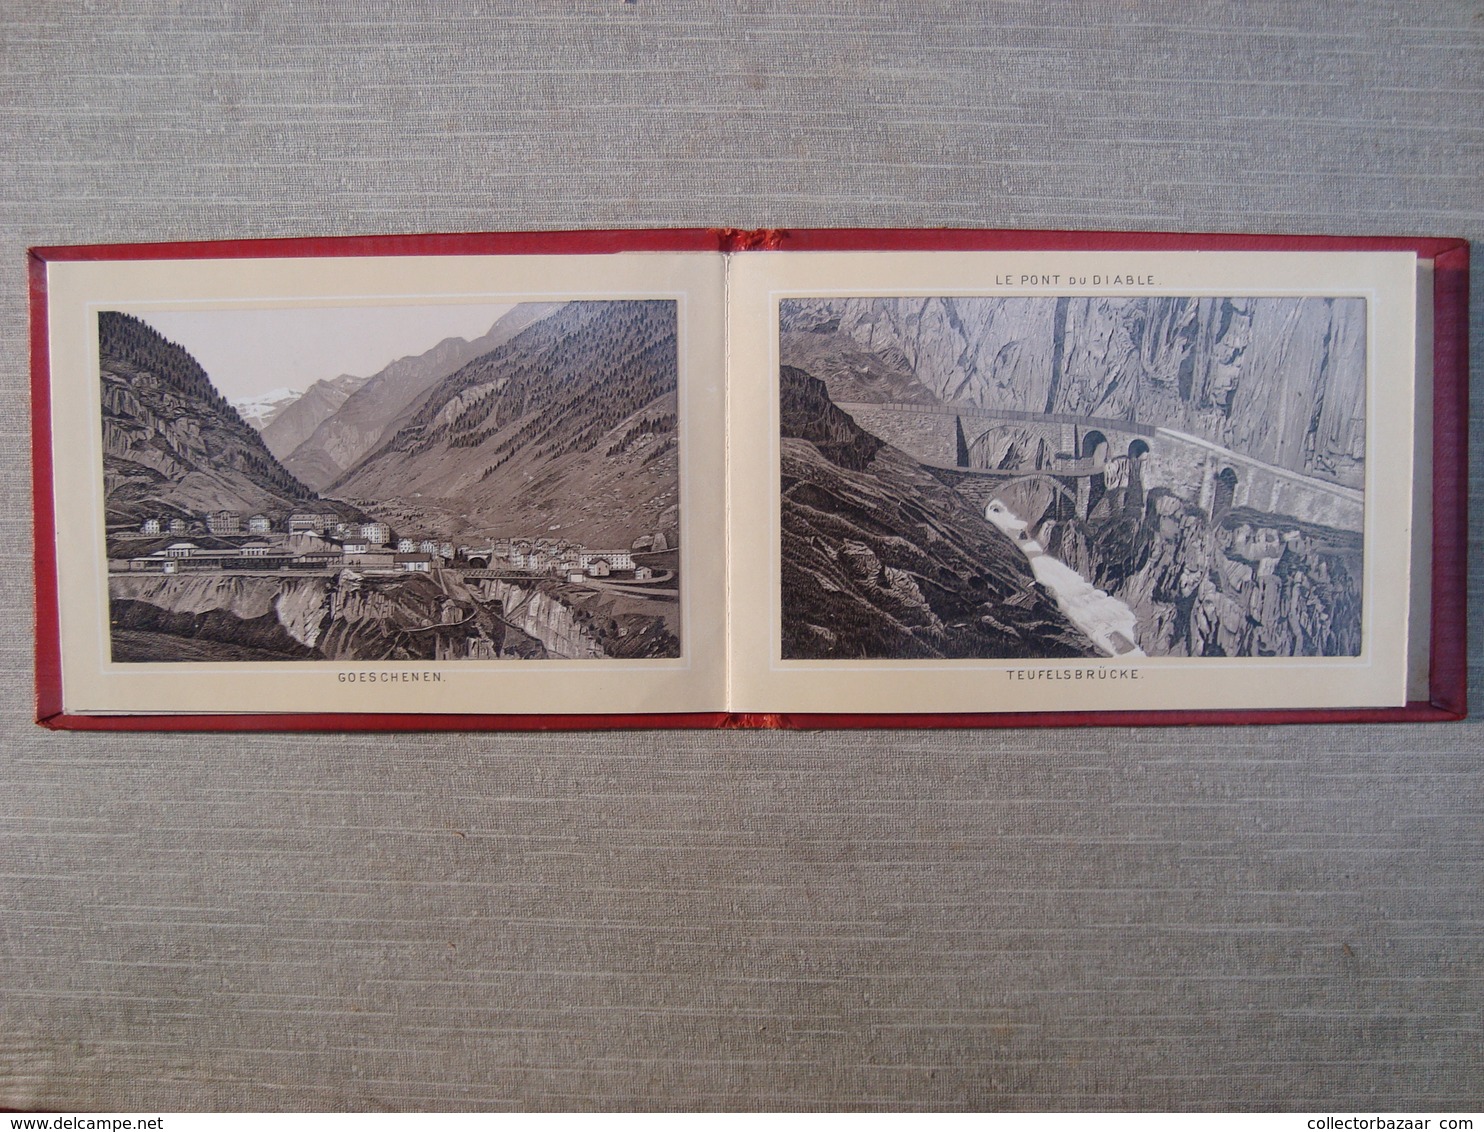 Album souvenir printed photographies ca1890 Souvenir route du St. Gotthard Karl Künzli Zurich Litho Synnberg & Ruttger